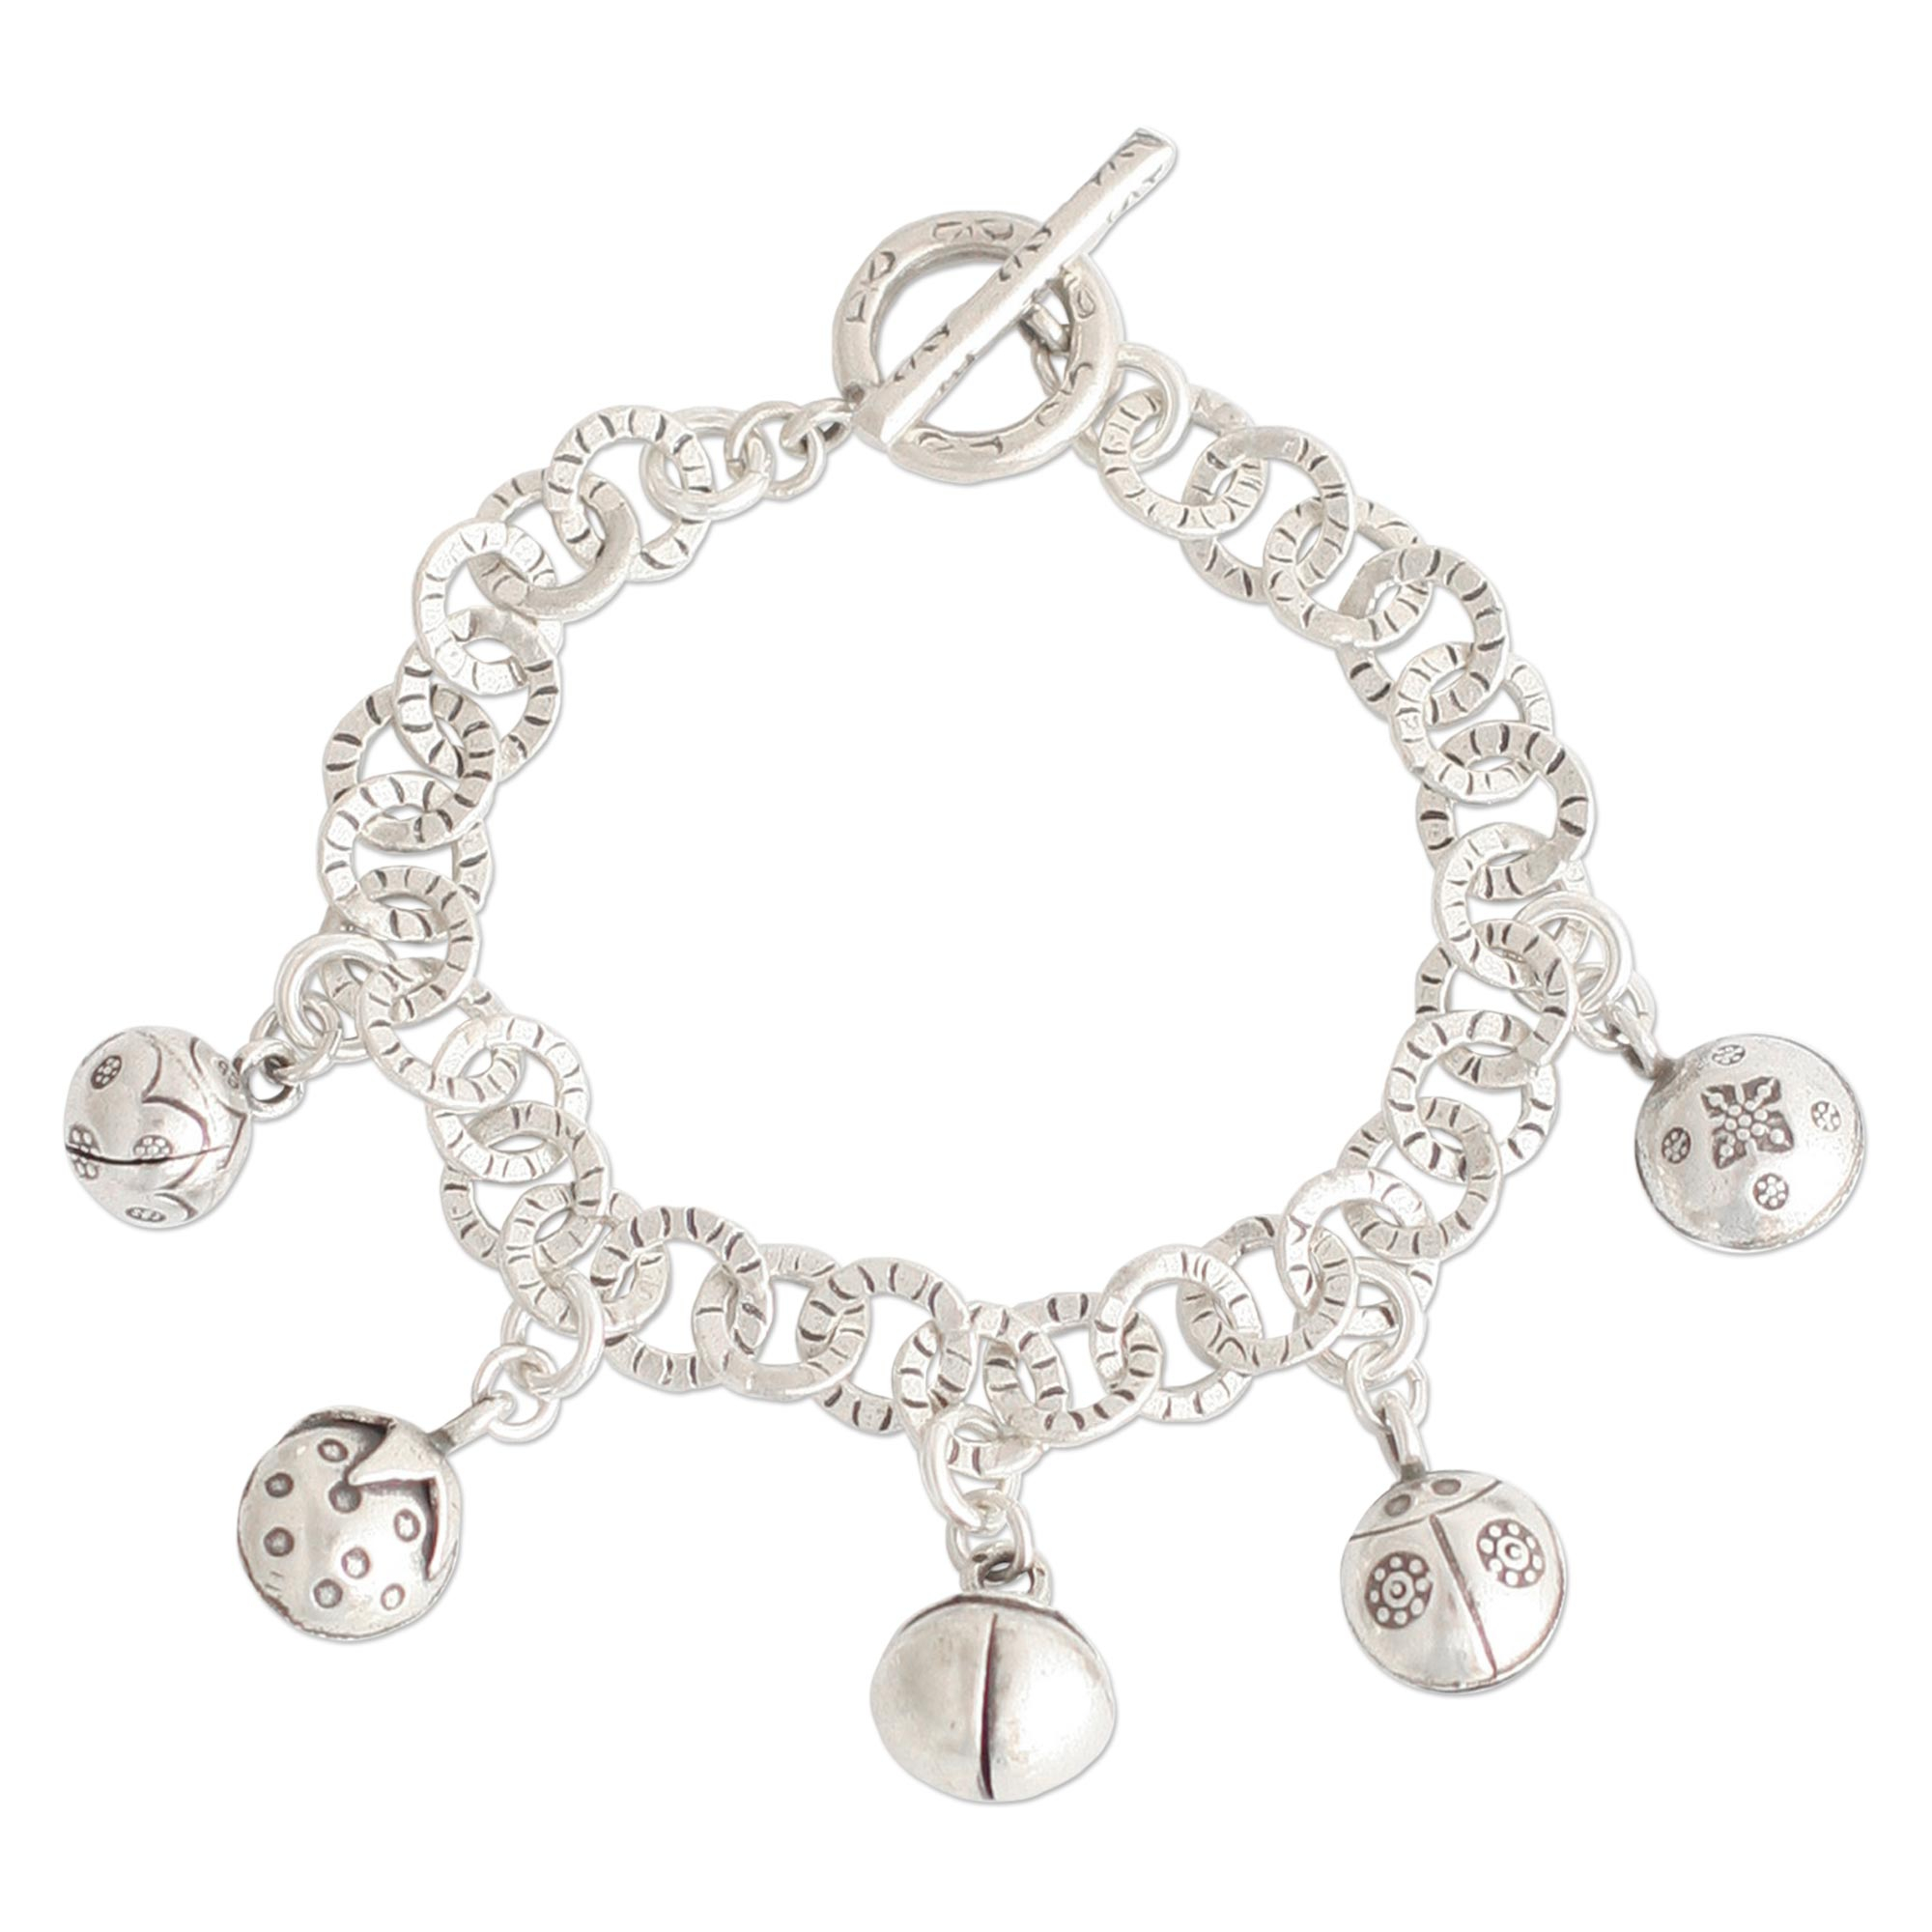 Handcrafted Silver Charm Bracelet - Ladybug Orchard | NOVICA